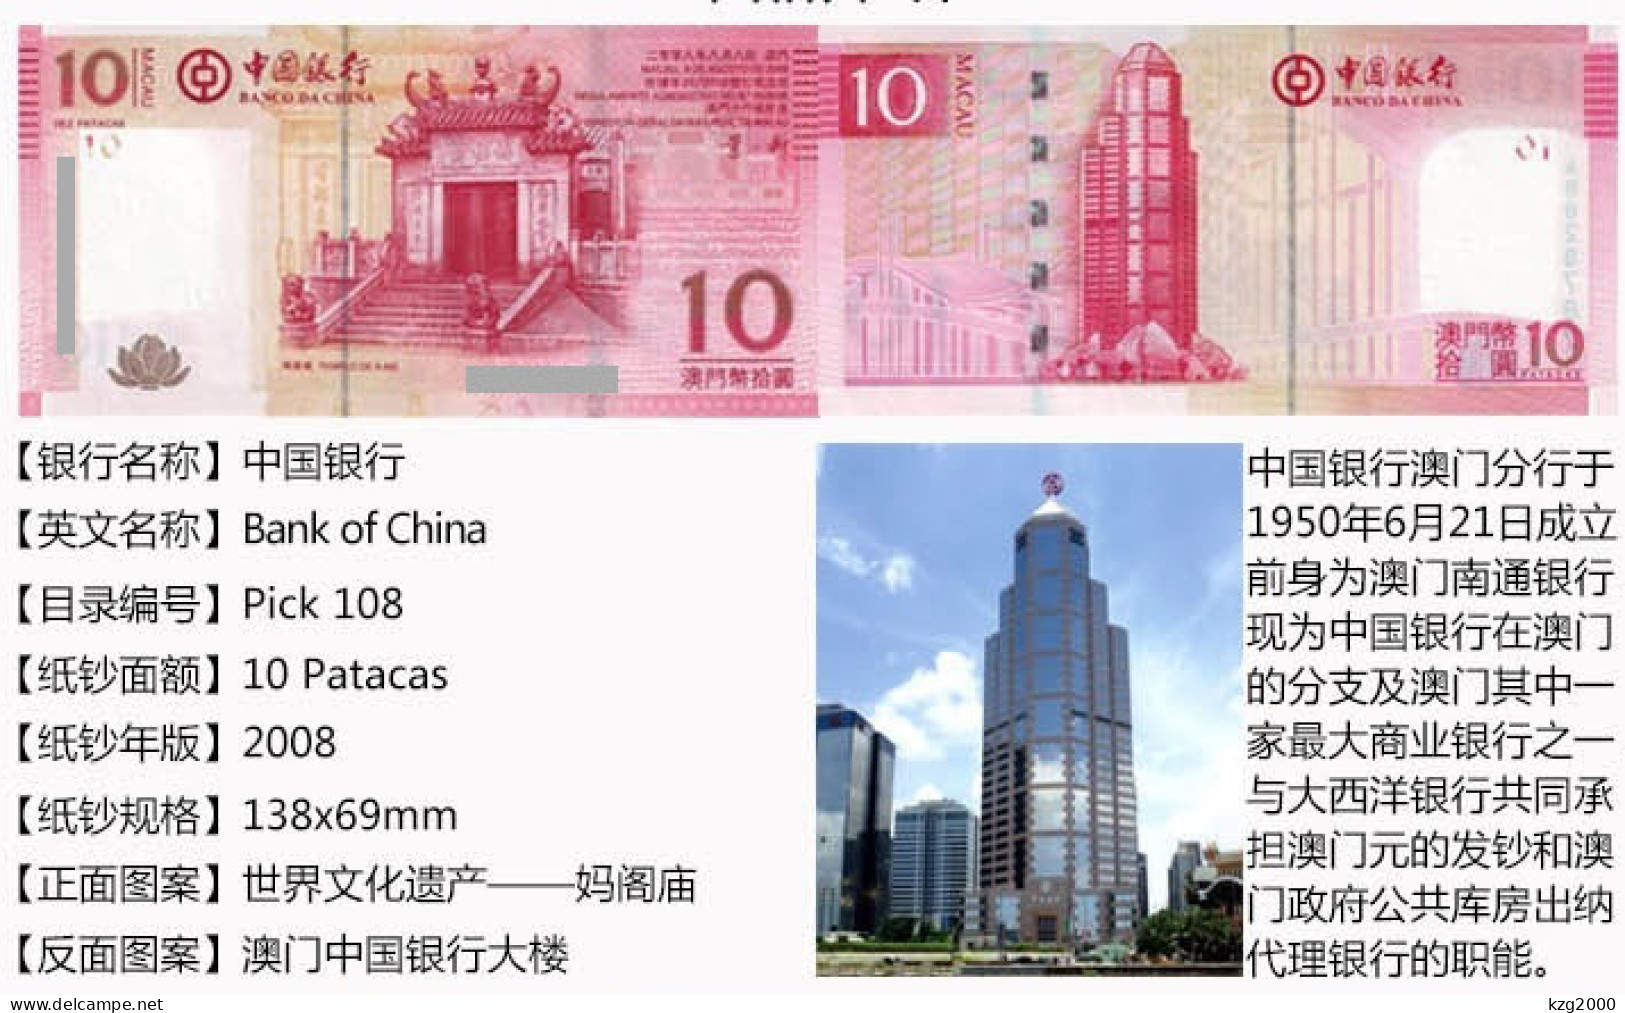 Macau Macao Paper Money 2008-2014  Banknotes 10 Dollars BOC Bank UNC Banknote - Macao